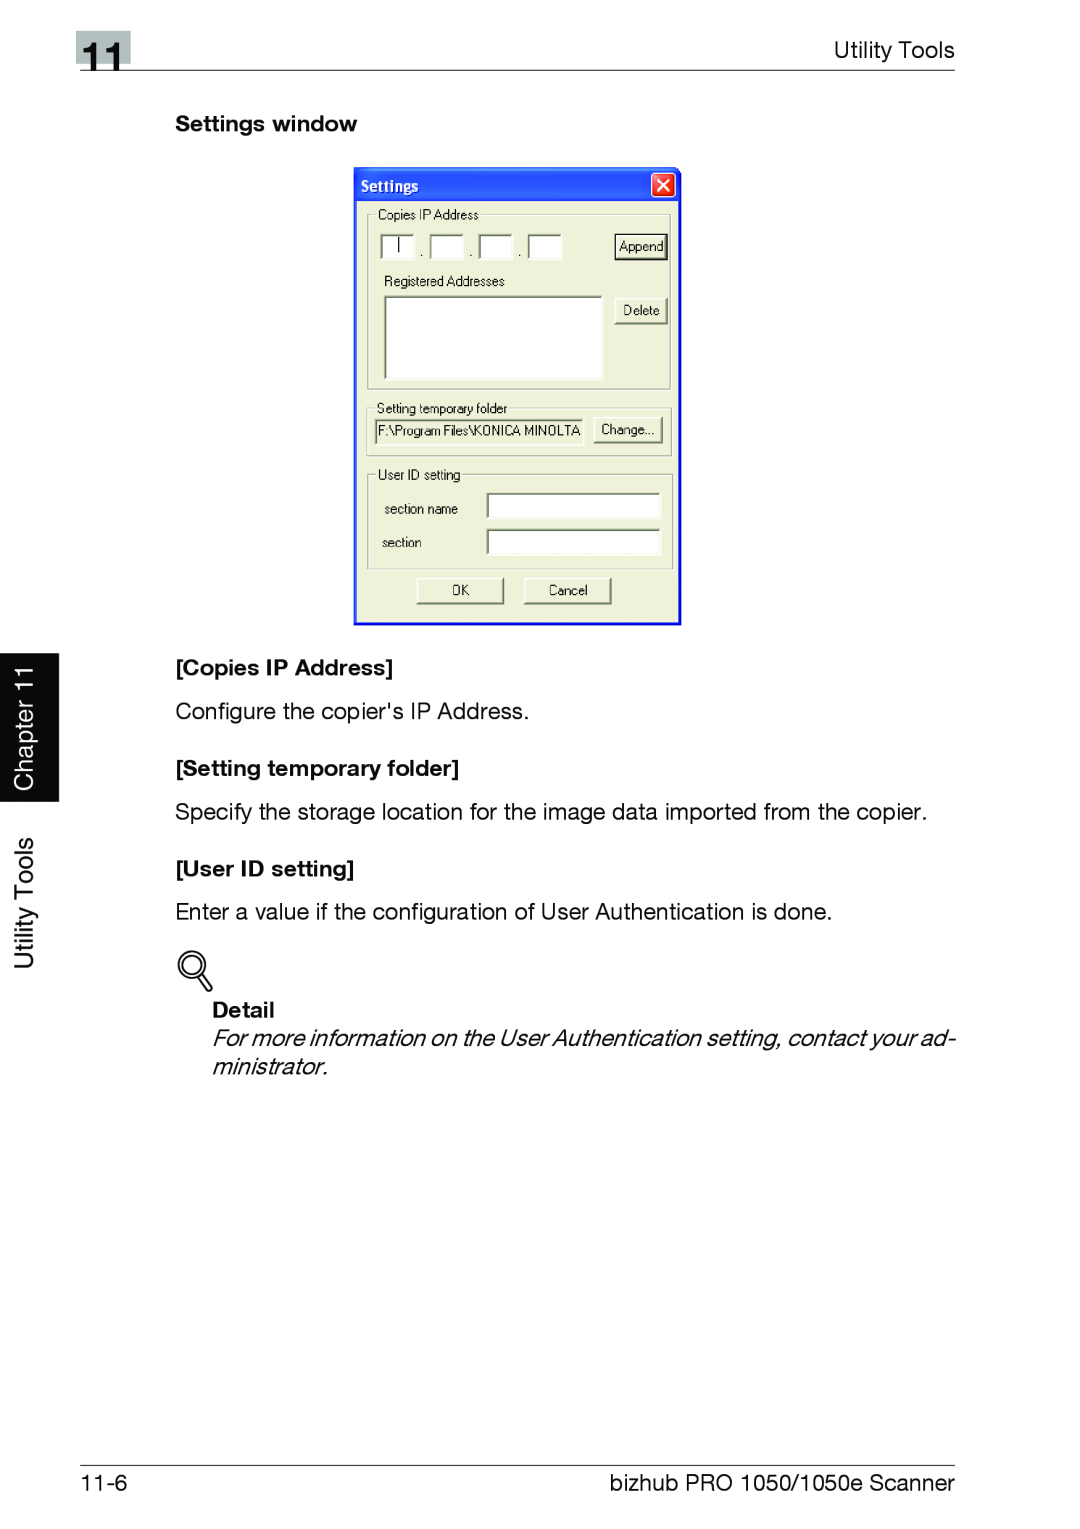 Konica Minolta 1050 Settings window, Copies IP Address, Setting temporary folder, User ID setting, Chapter, Utility Tools 